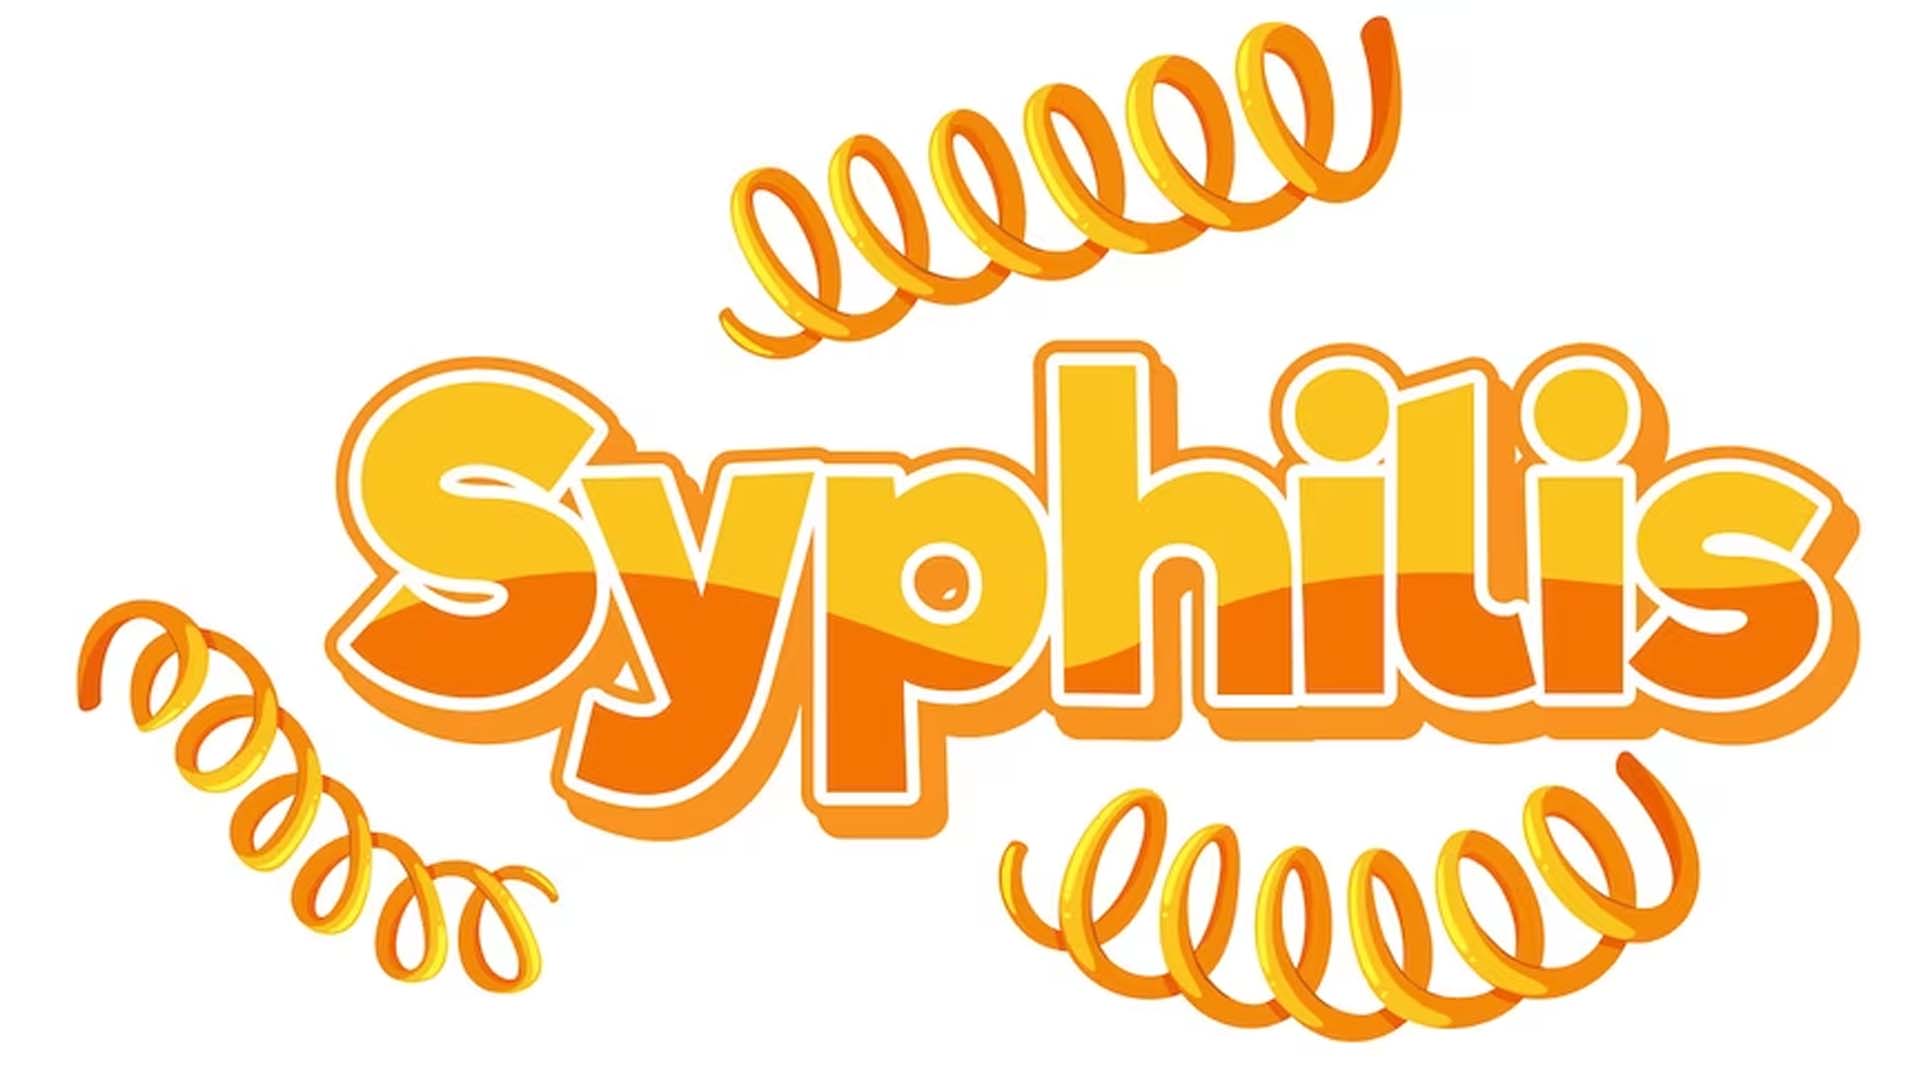 Syphilis